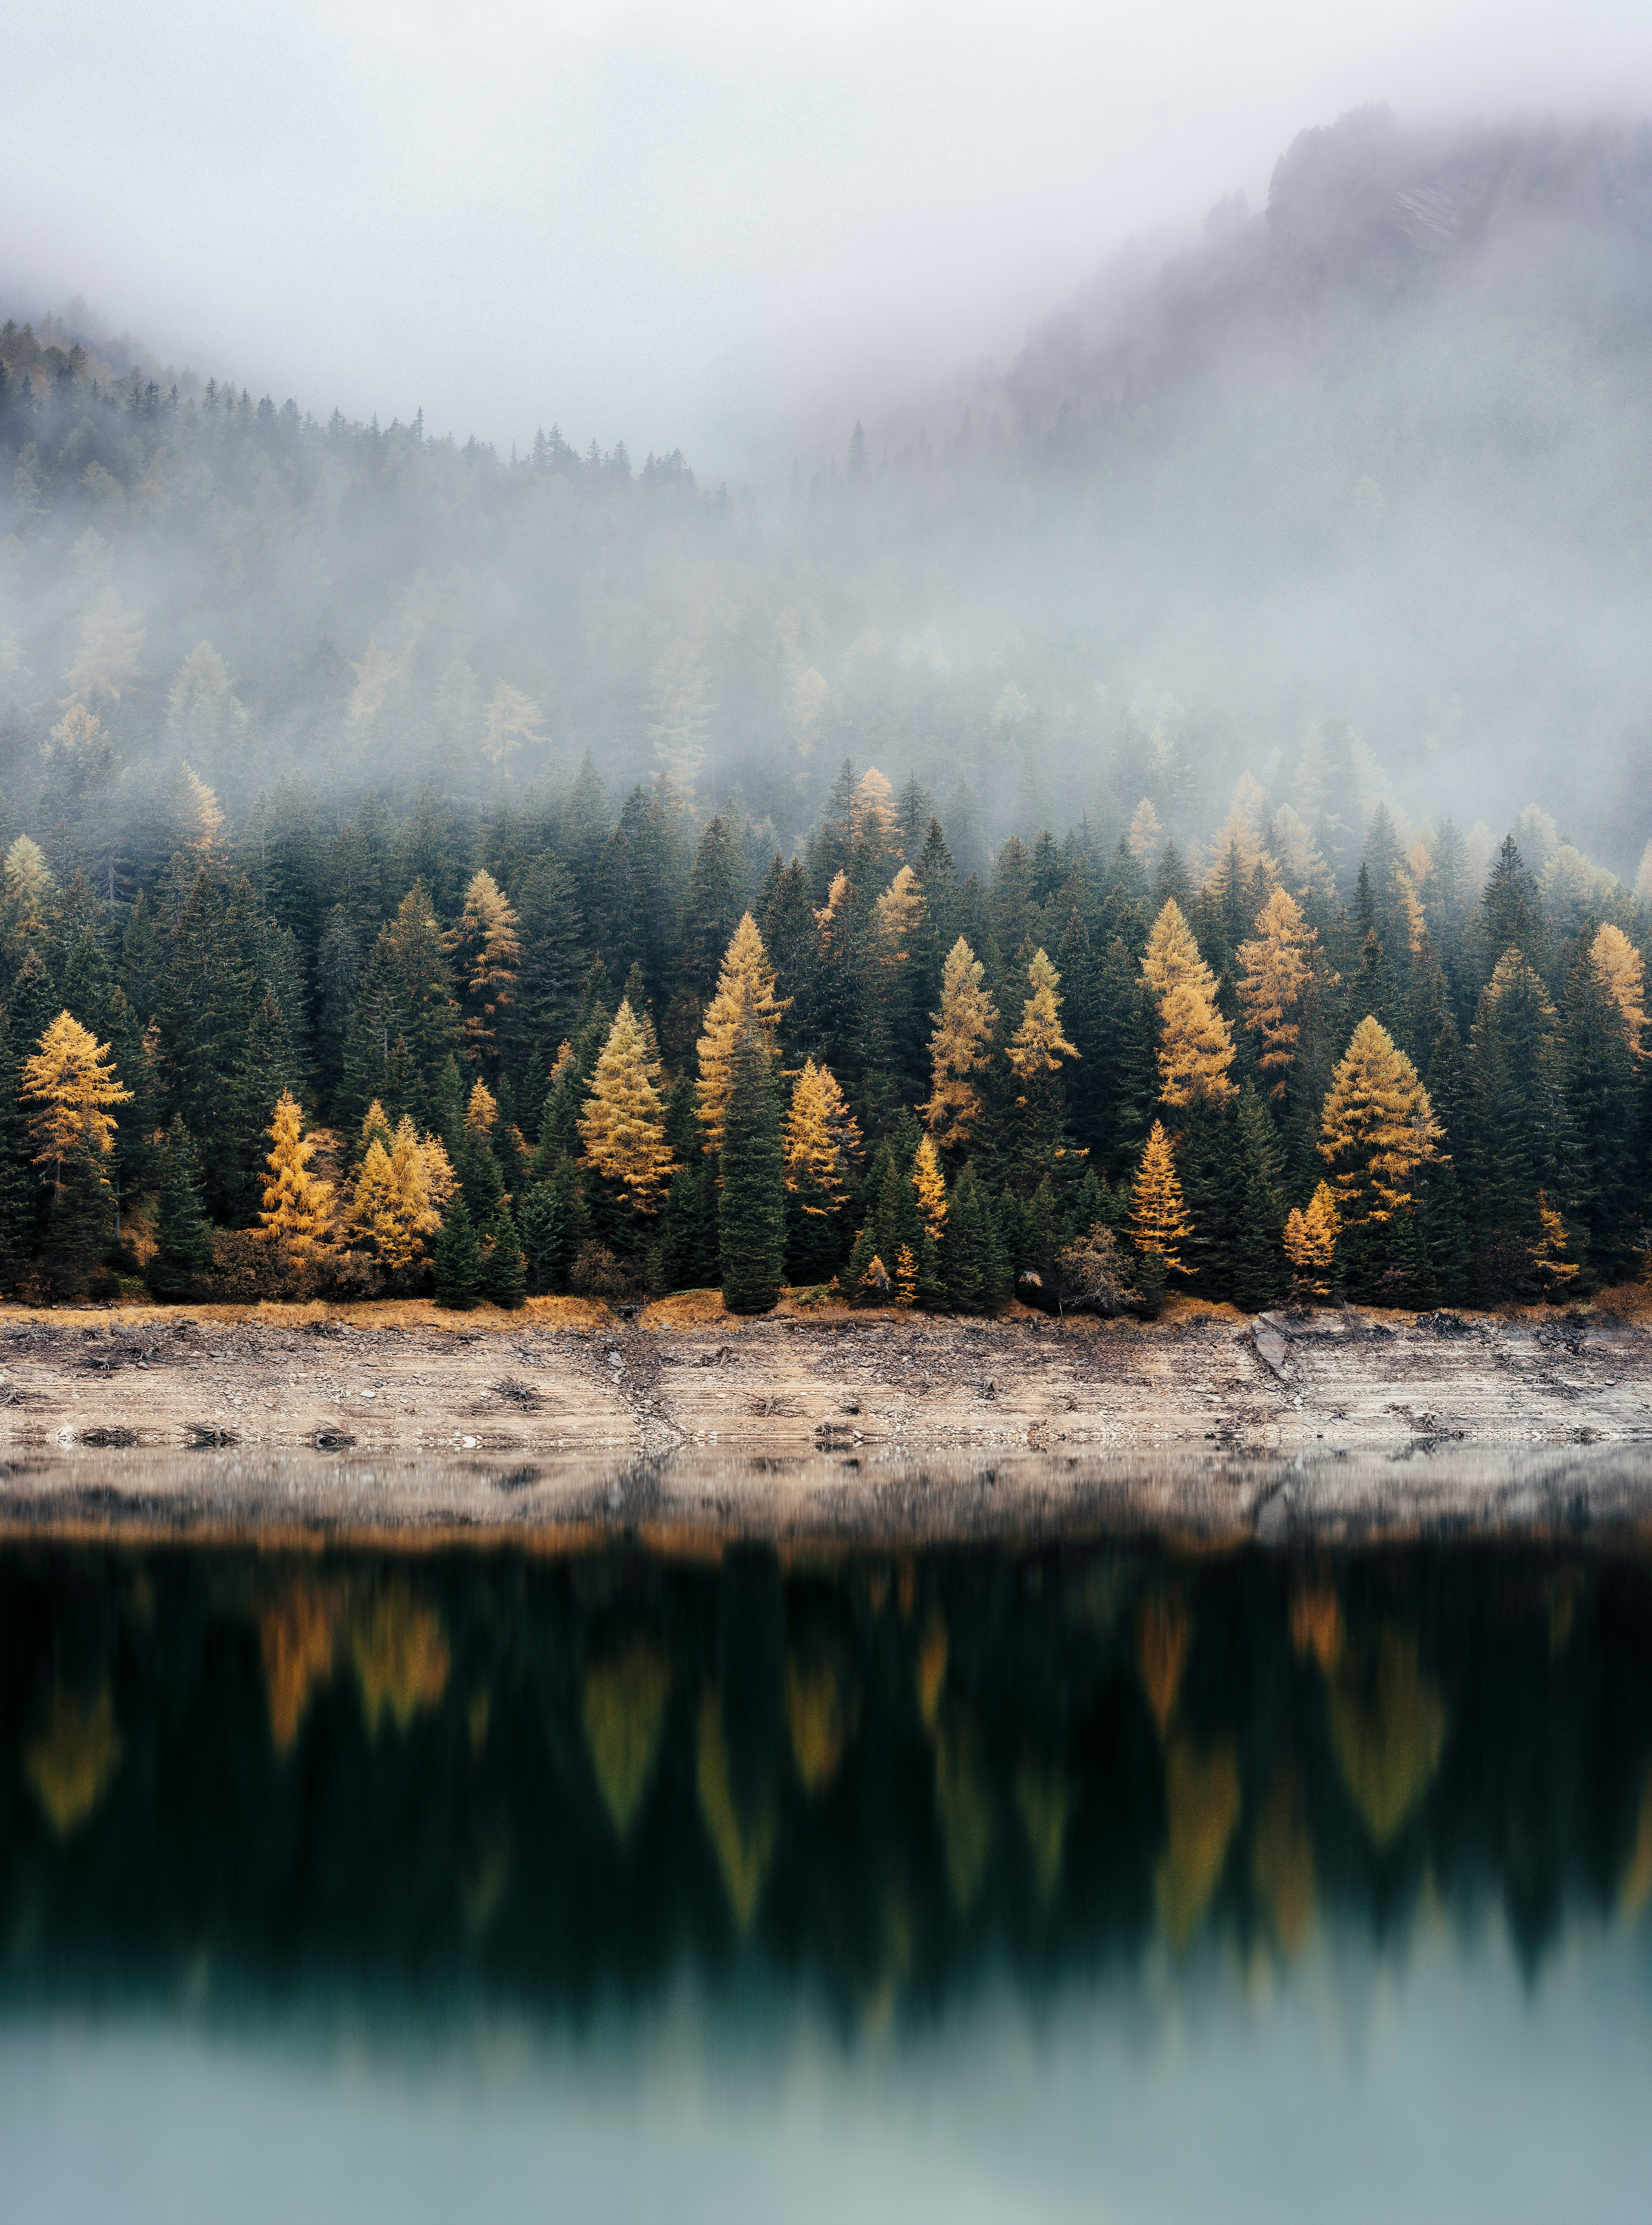 Autumn woods across the lake